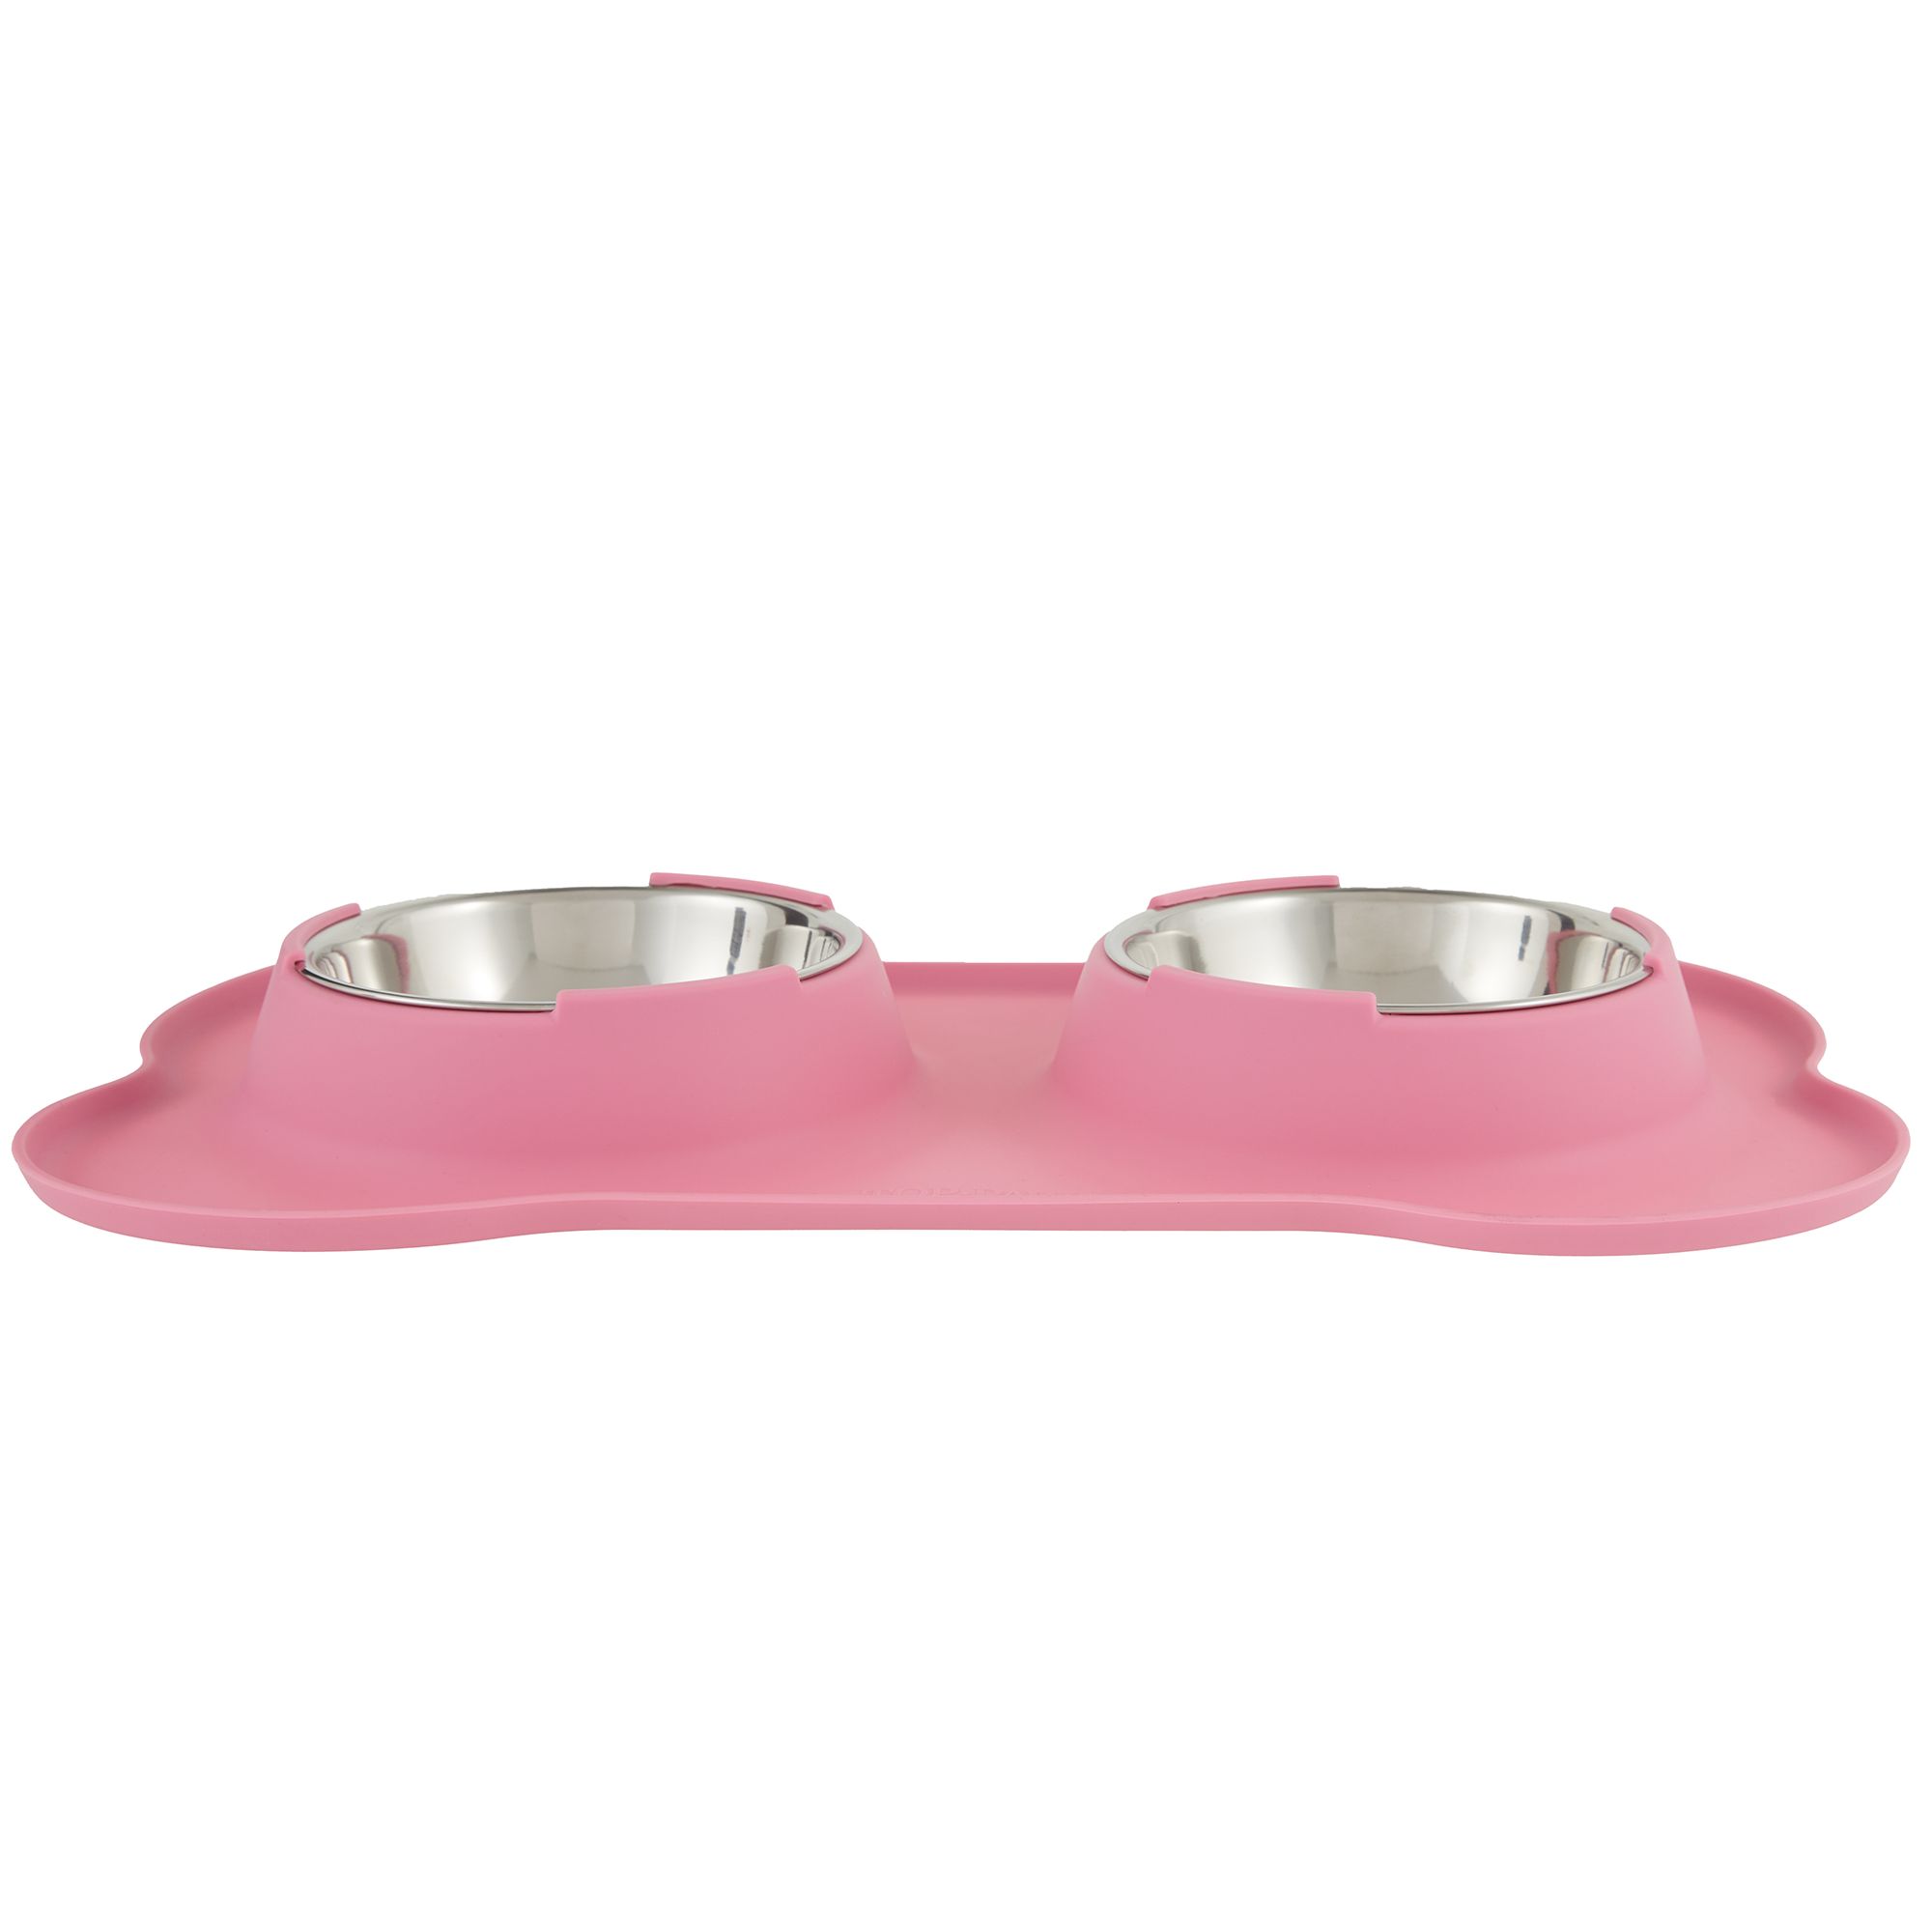 Top Paw® Pearl Plastic Dog Bowl, dog Food & Water Bowls, PetSmart